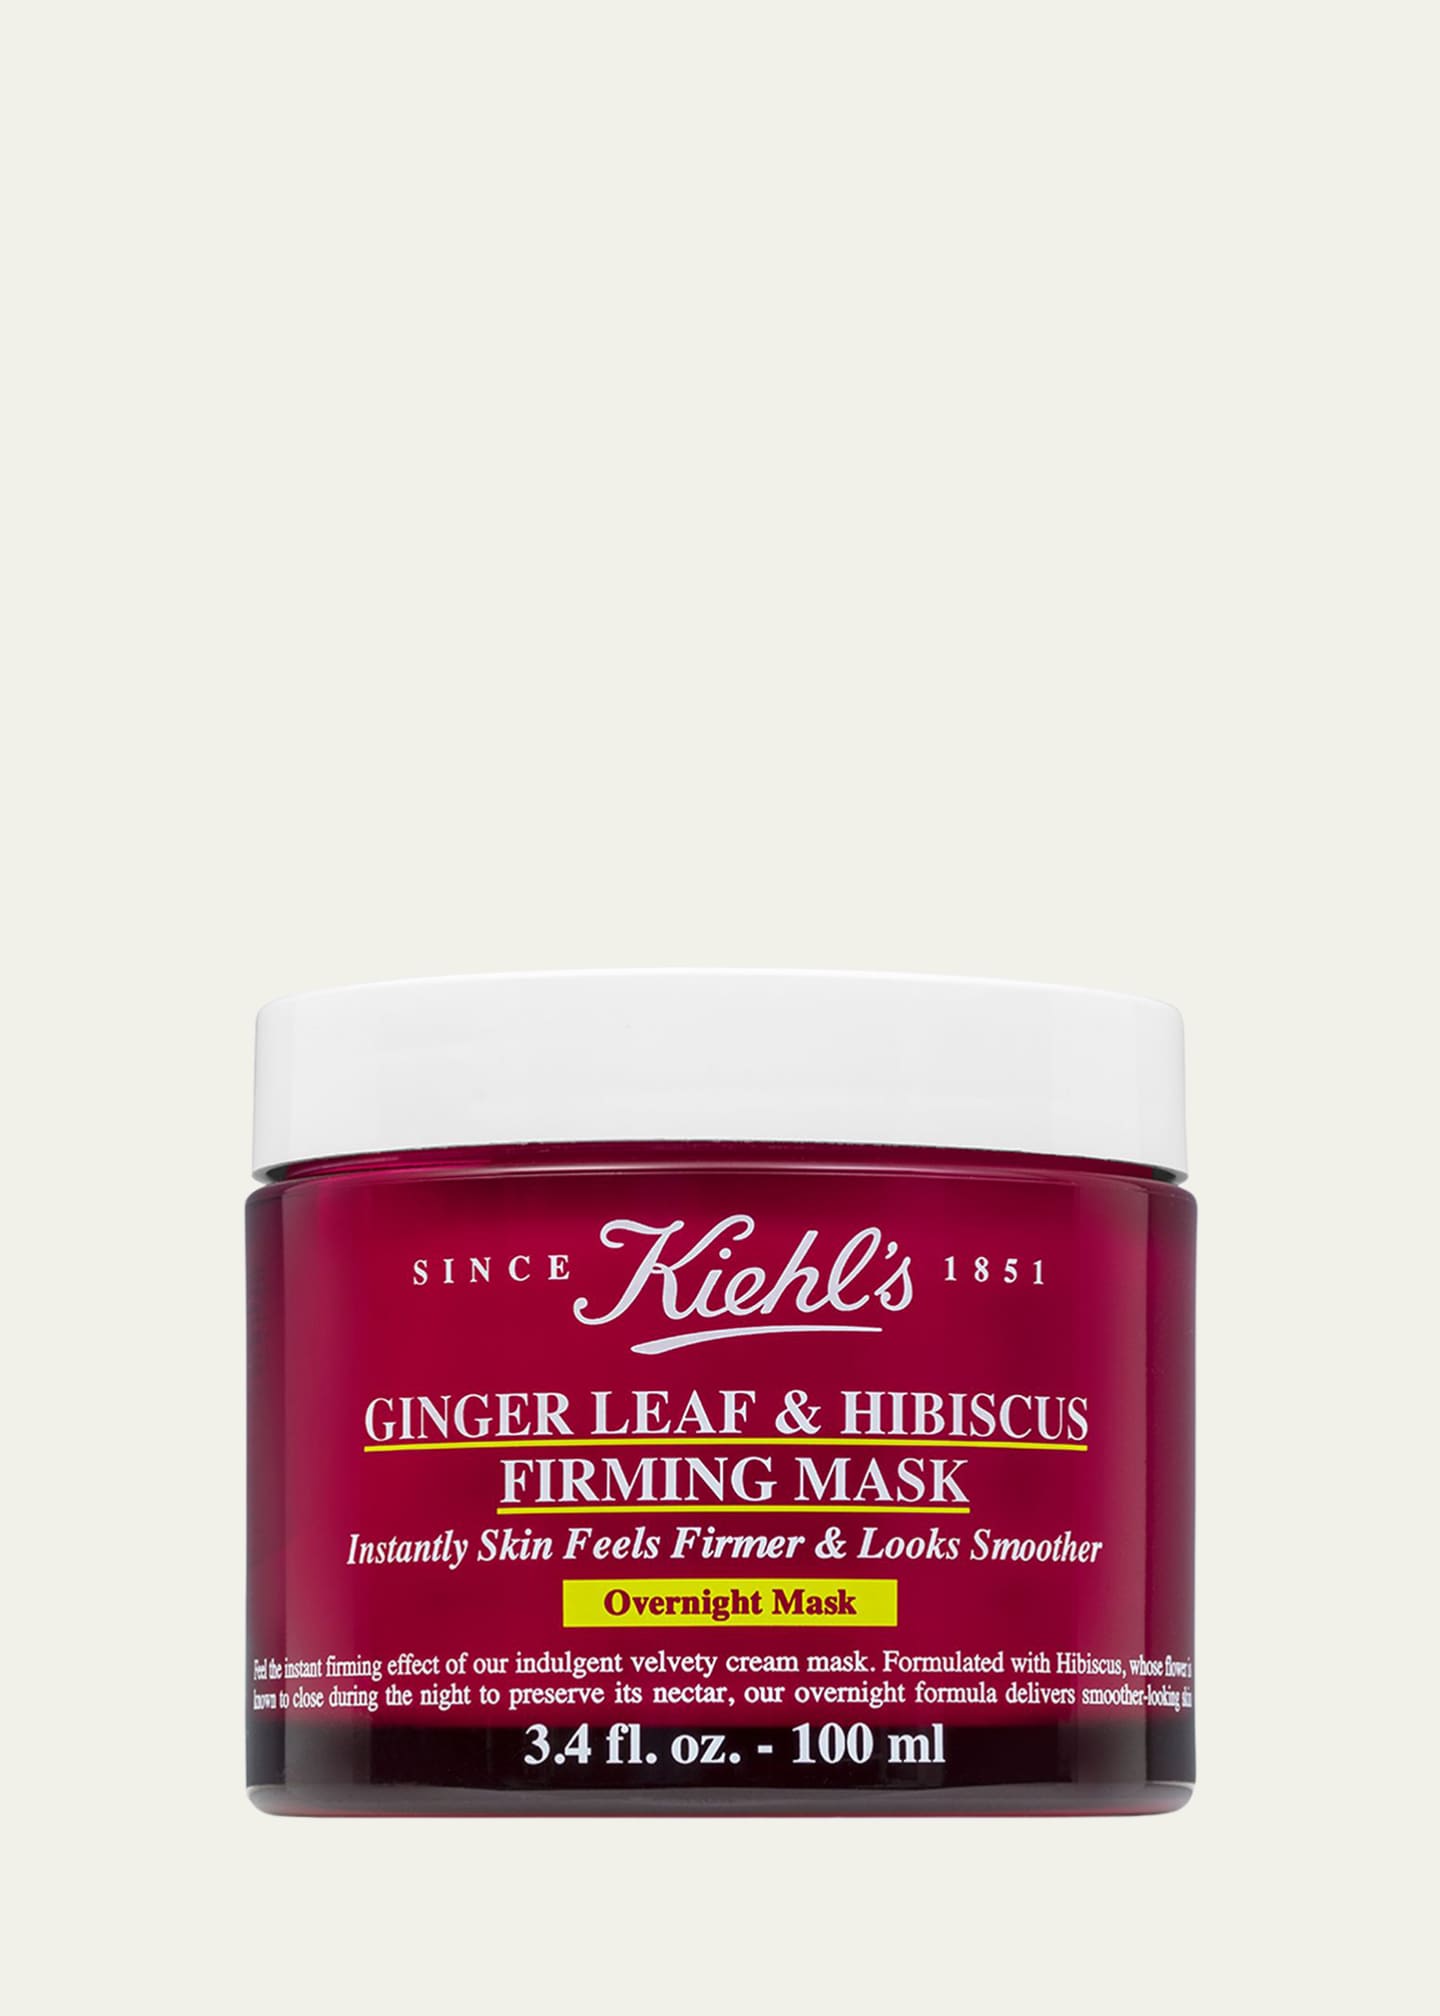 Kiehl's Since 1851 Ginger Leaf & Hibiscus Firming Mask, 3.4 oz. Image 1 of 5